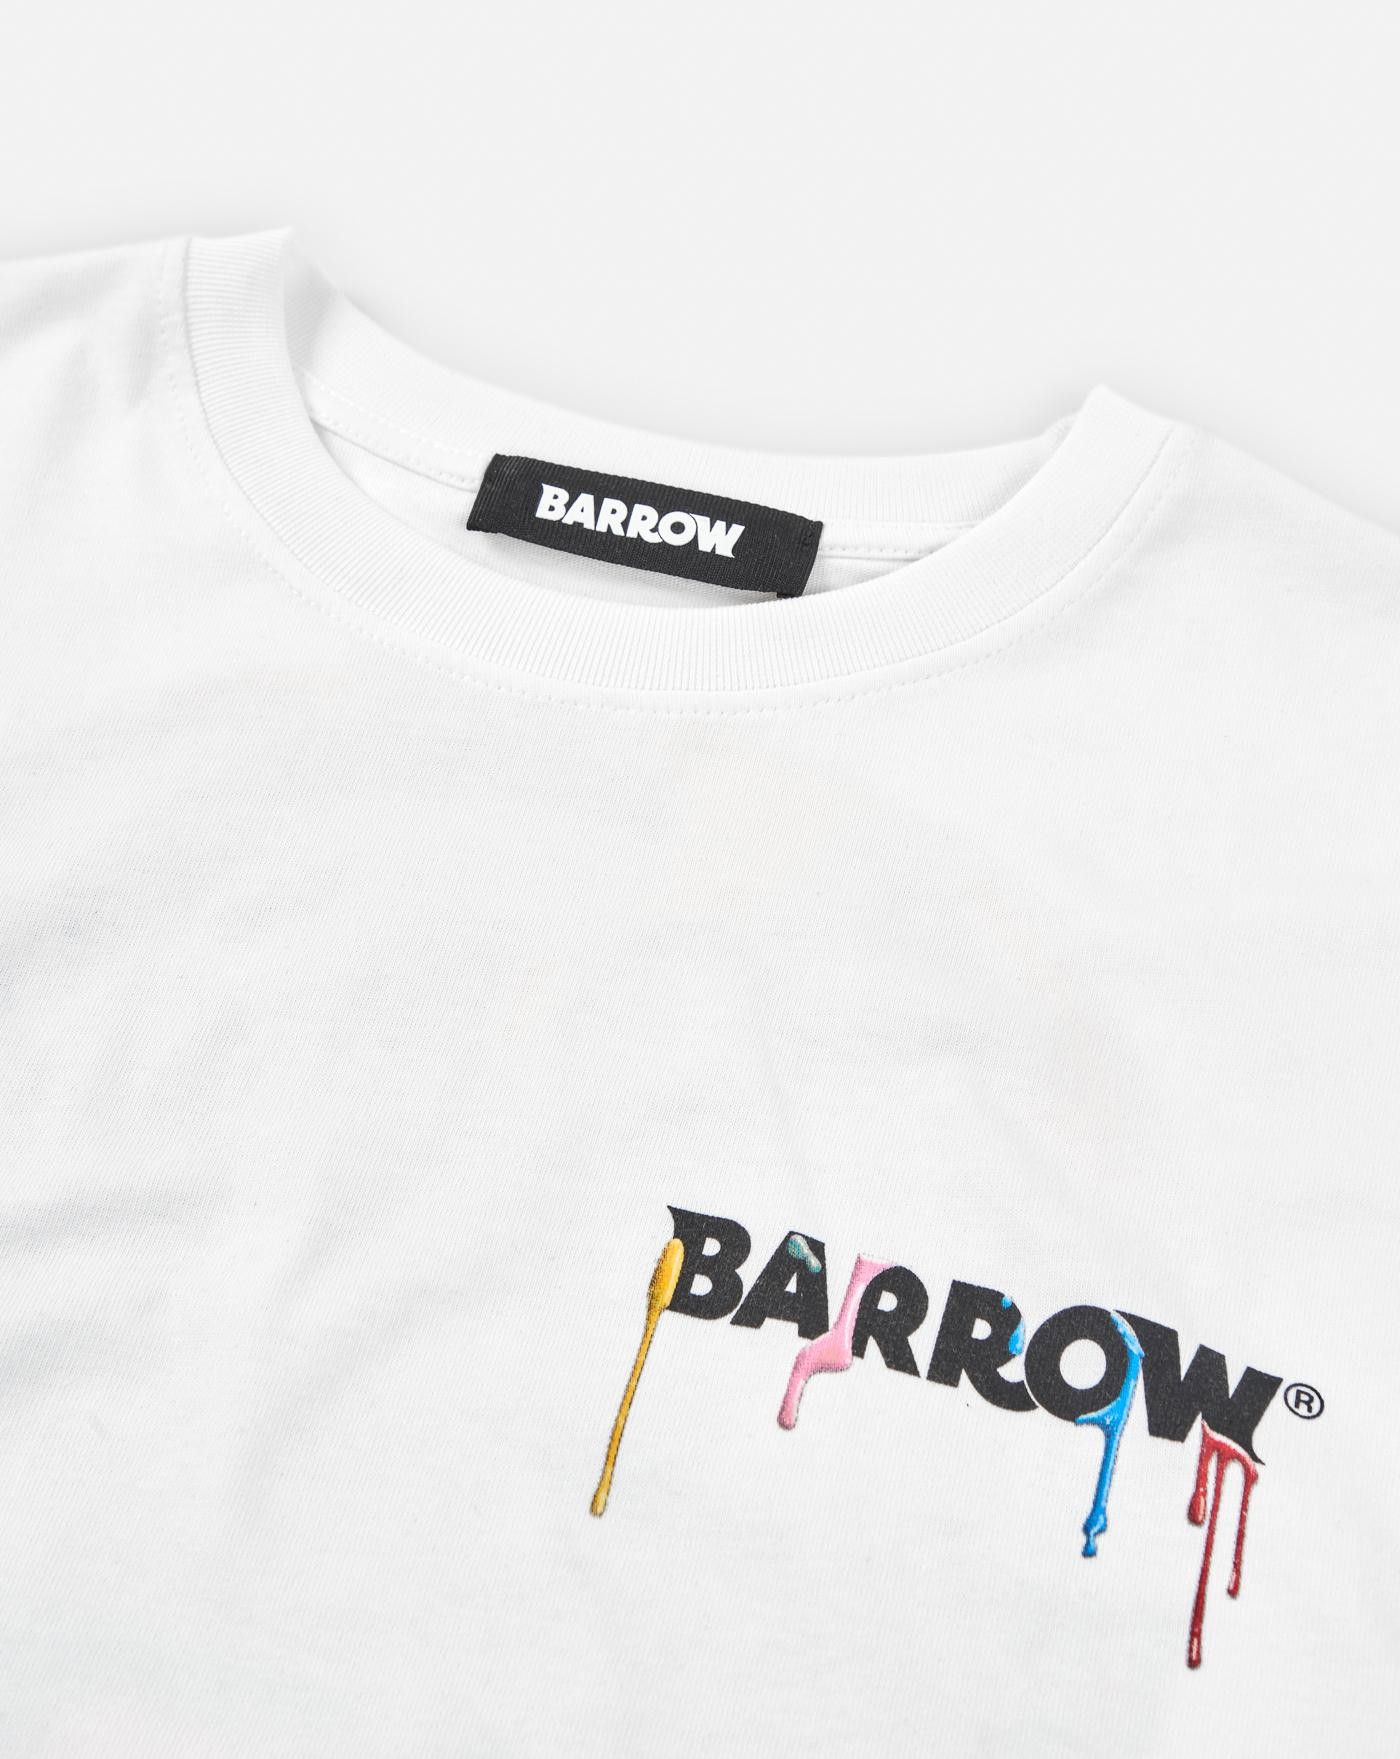 Camiseta Barrow Paint 2